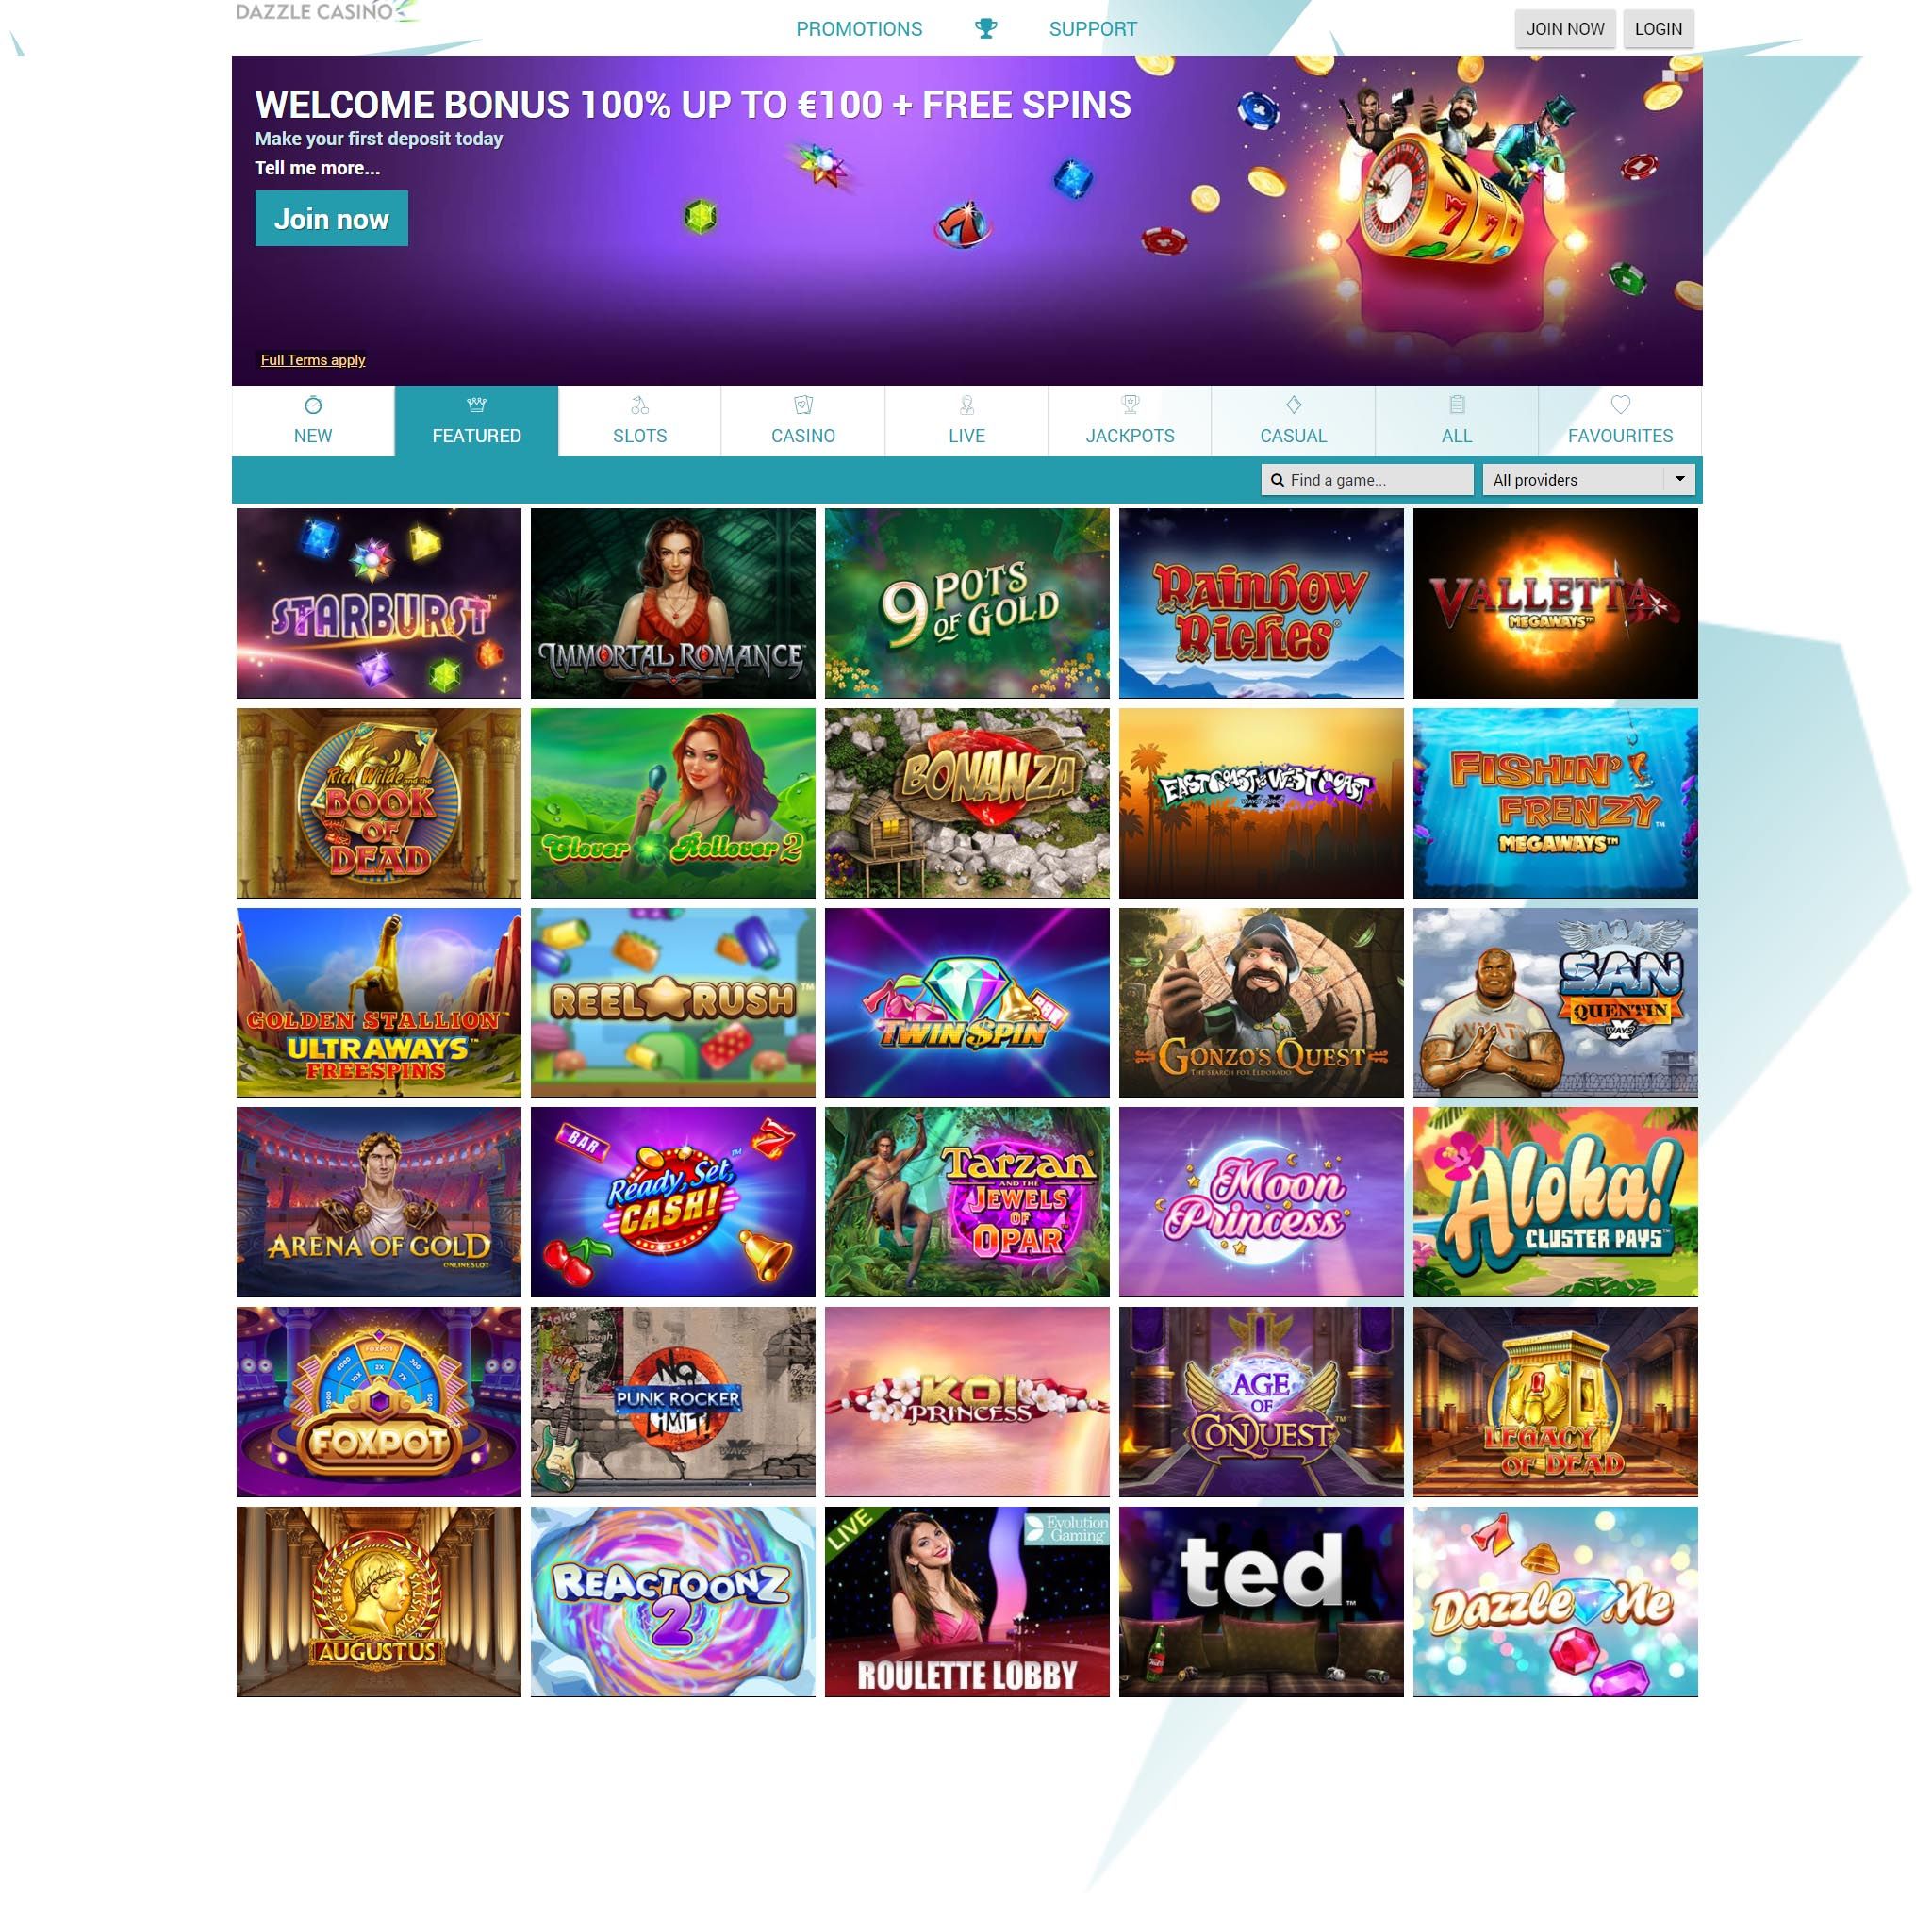 Dazzle Casino full games catalogue